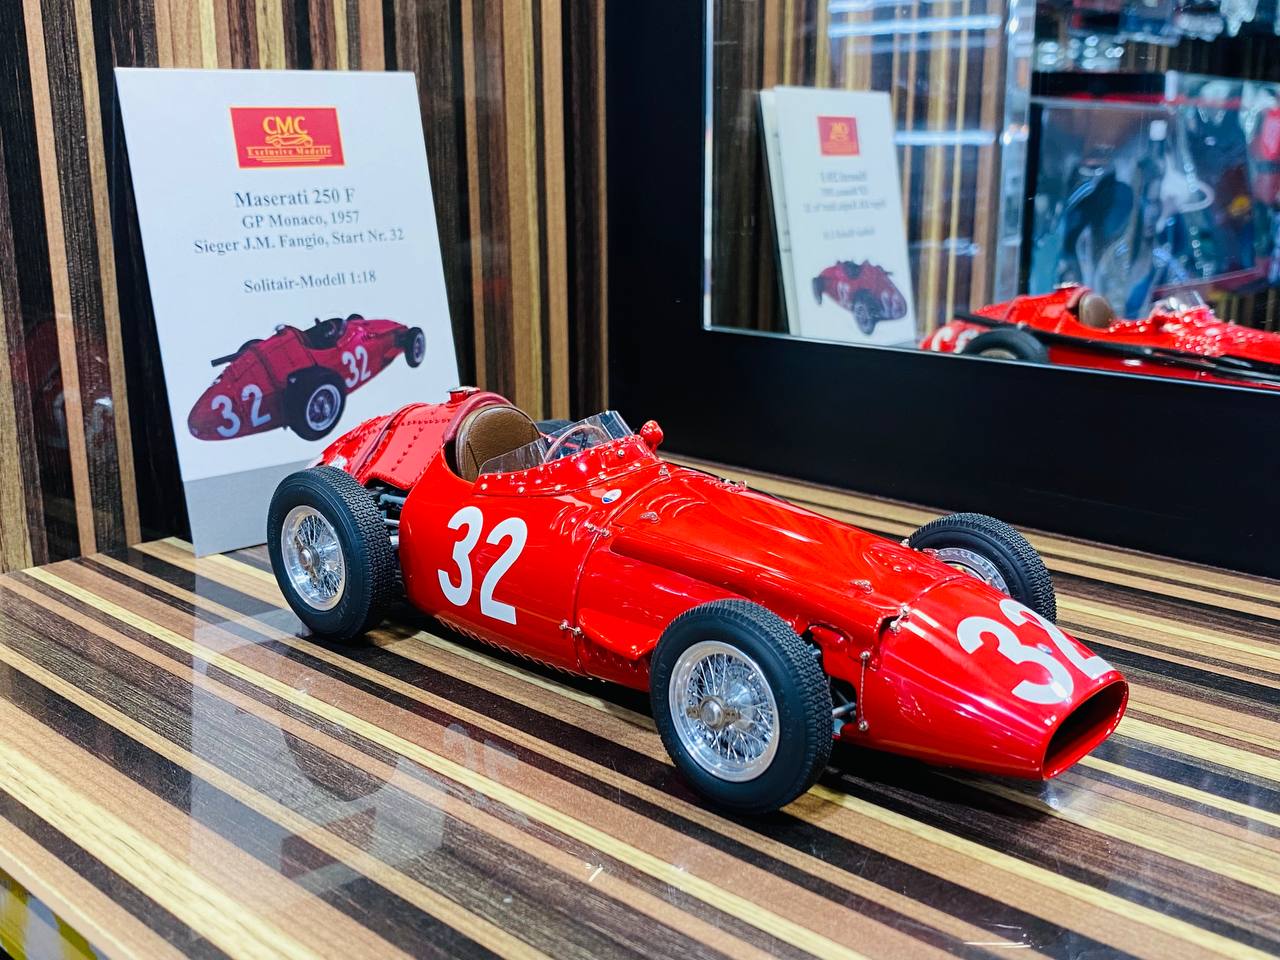 CMC Maserati 250 F GP Monaco, 1957 Sieger J.M Fangio, Start Nr. 32 [1/18 Red Diecast]